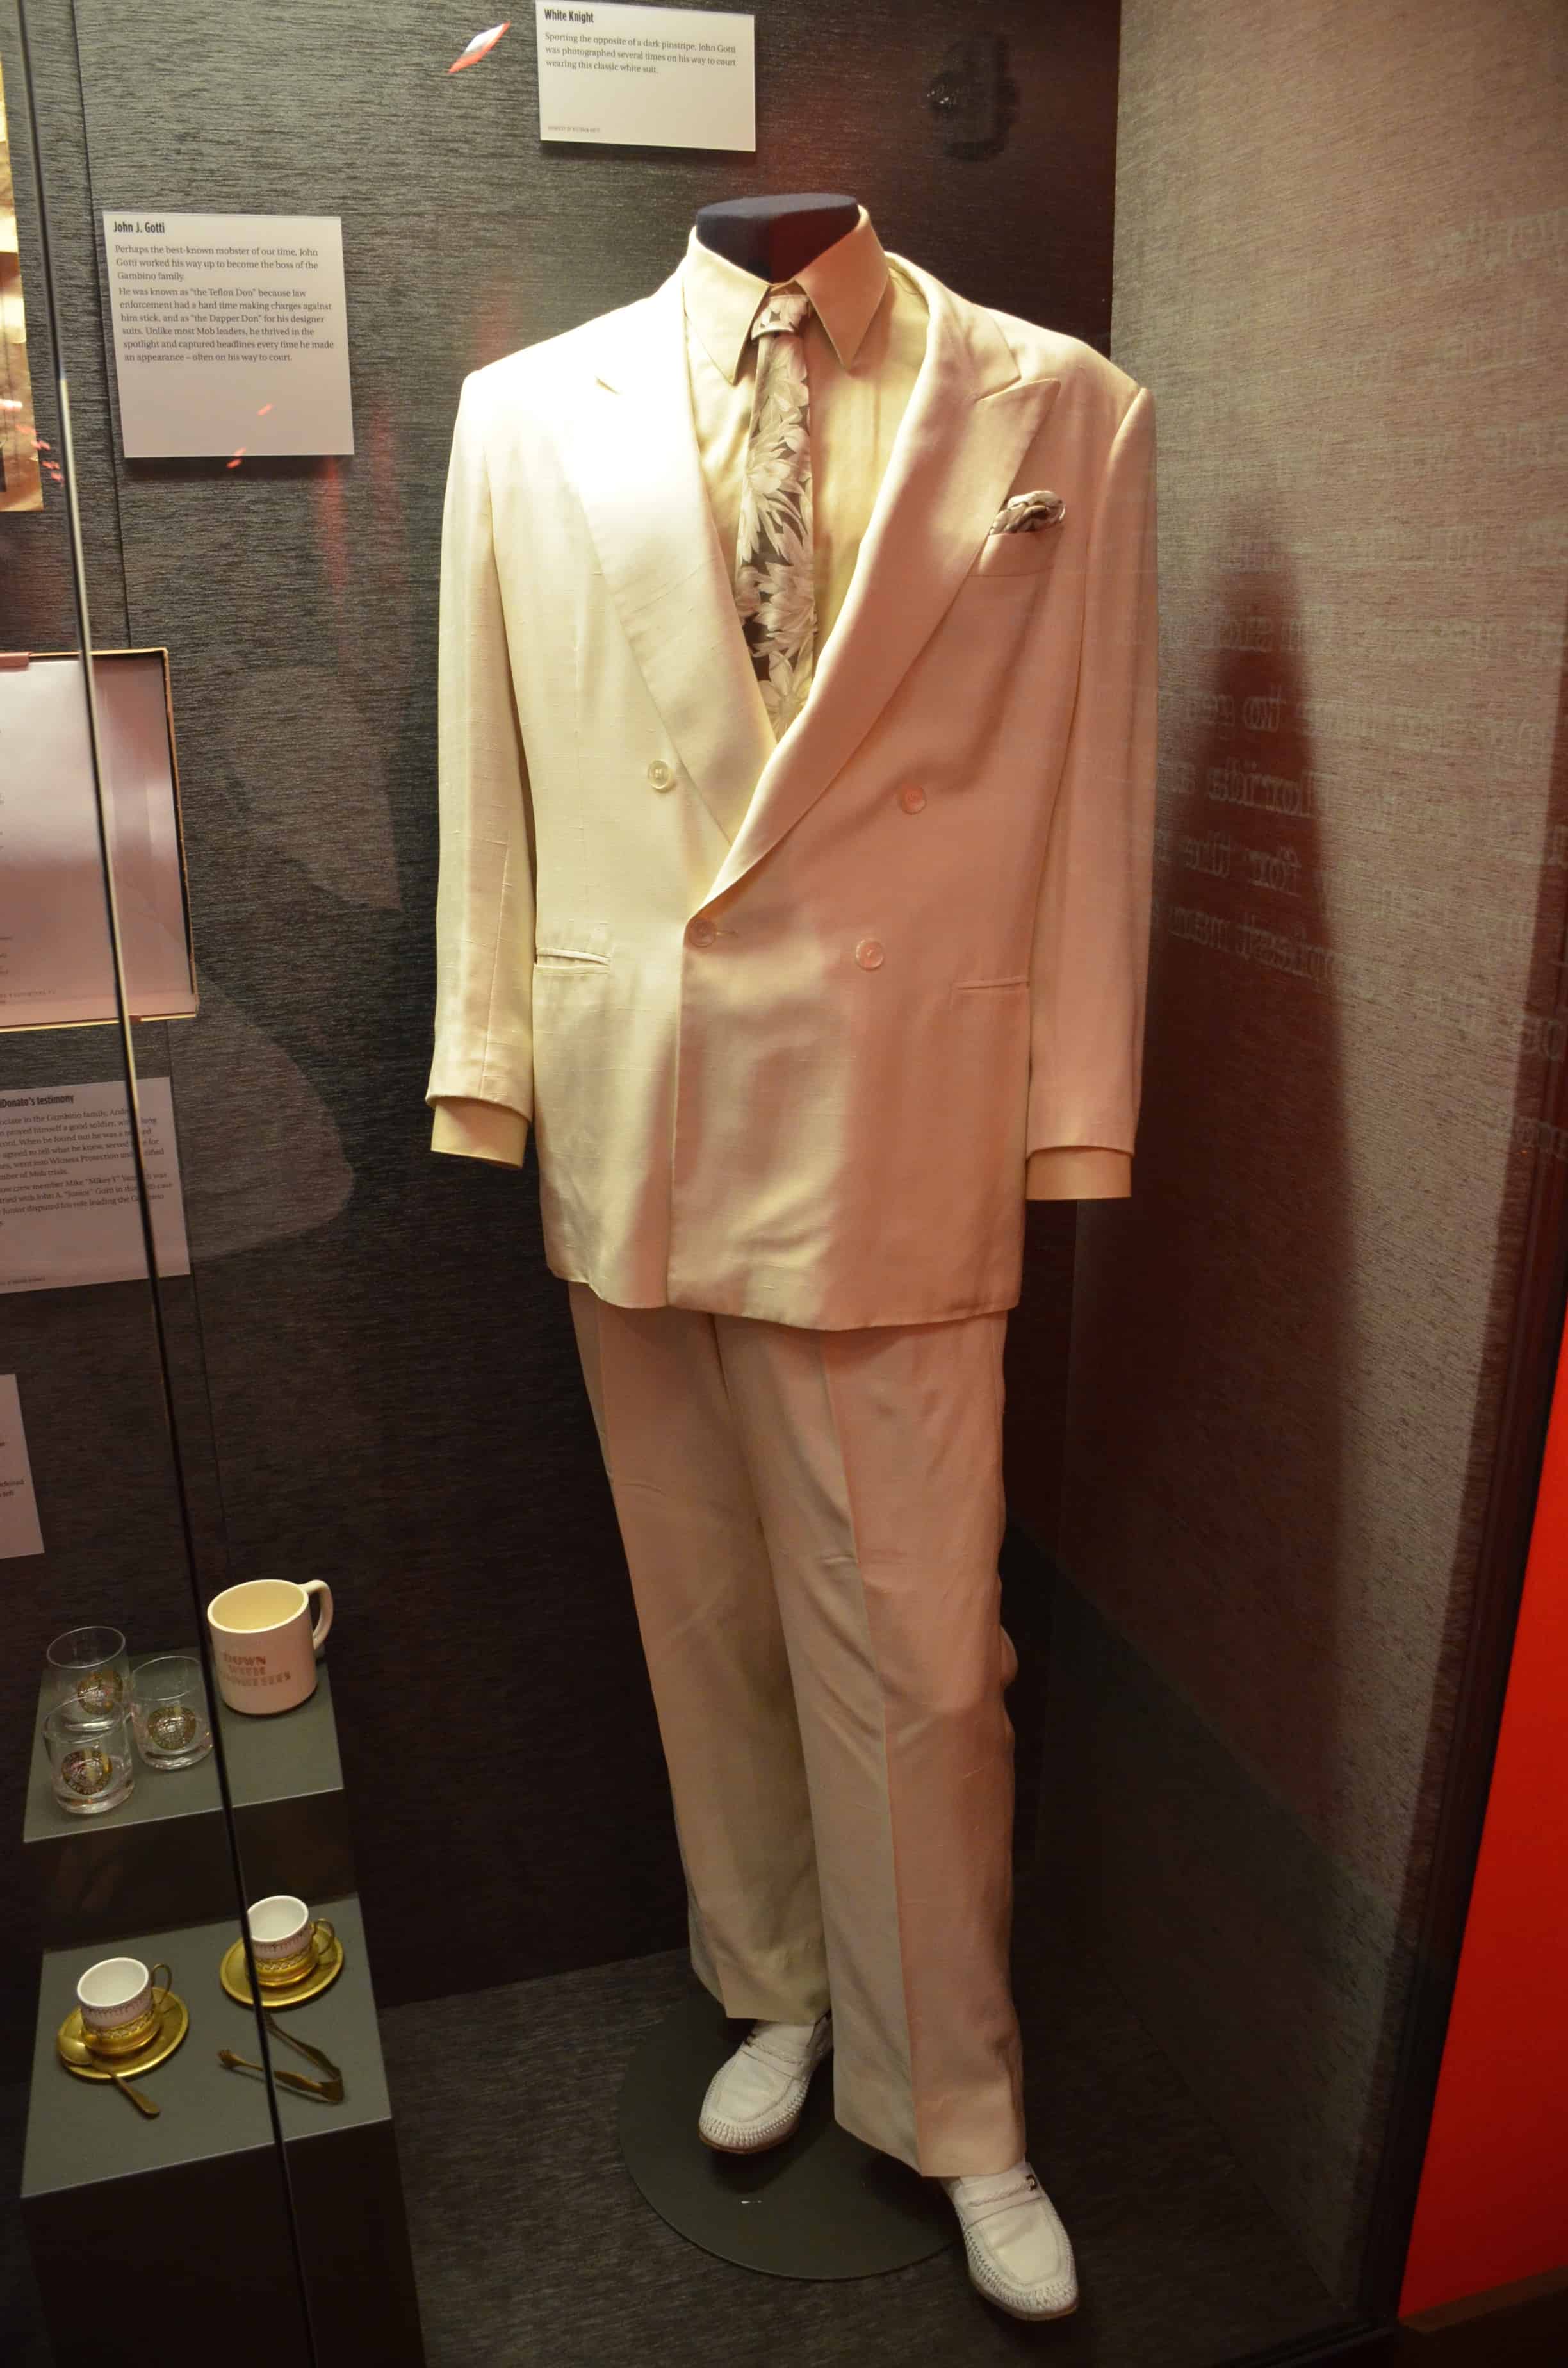 John Gotti's suit at the Mob Museum in Las Vegas, Nevada